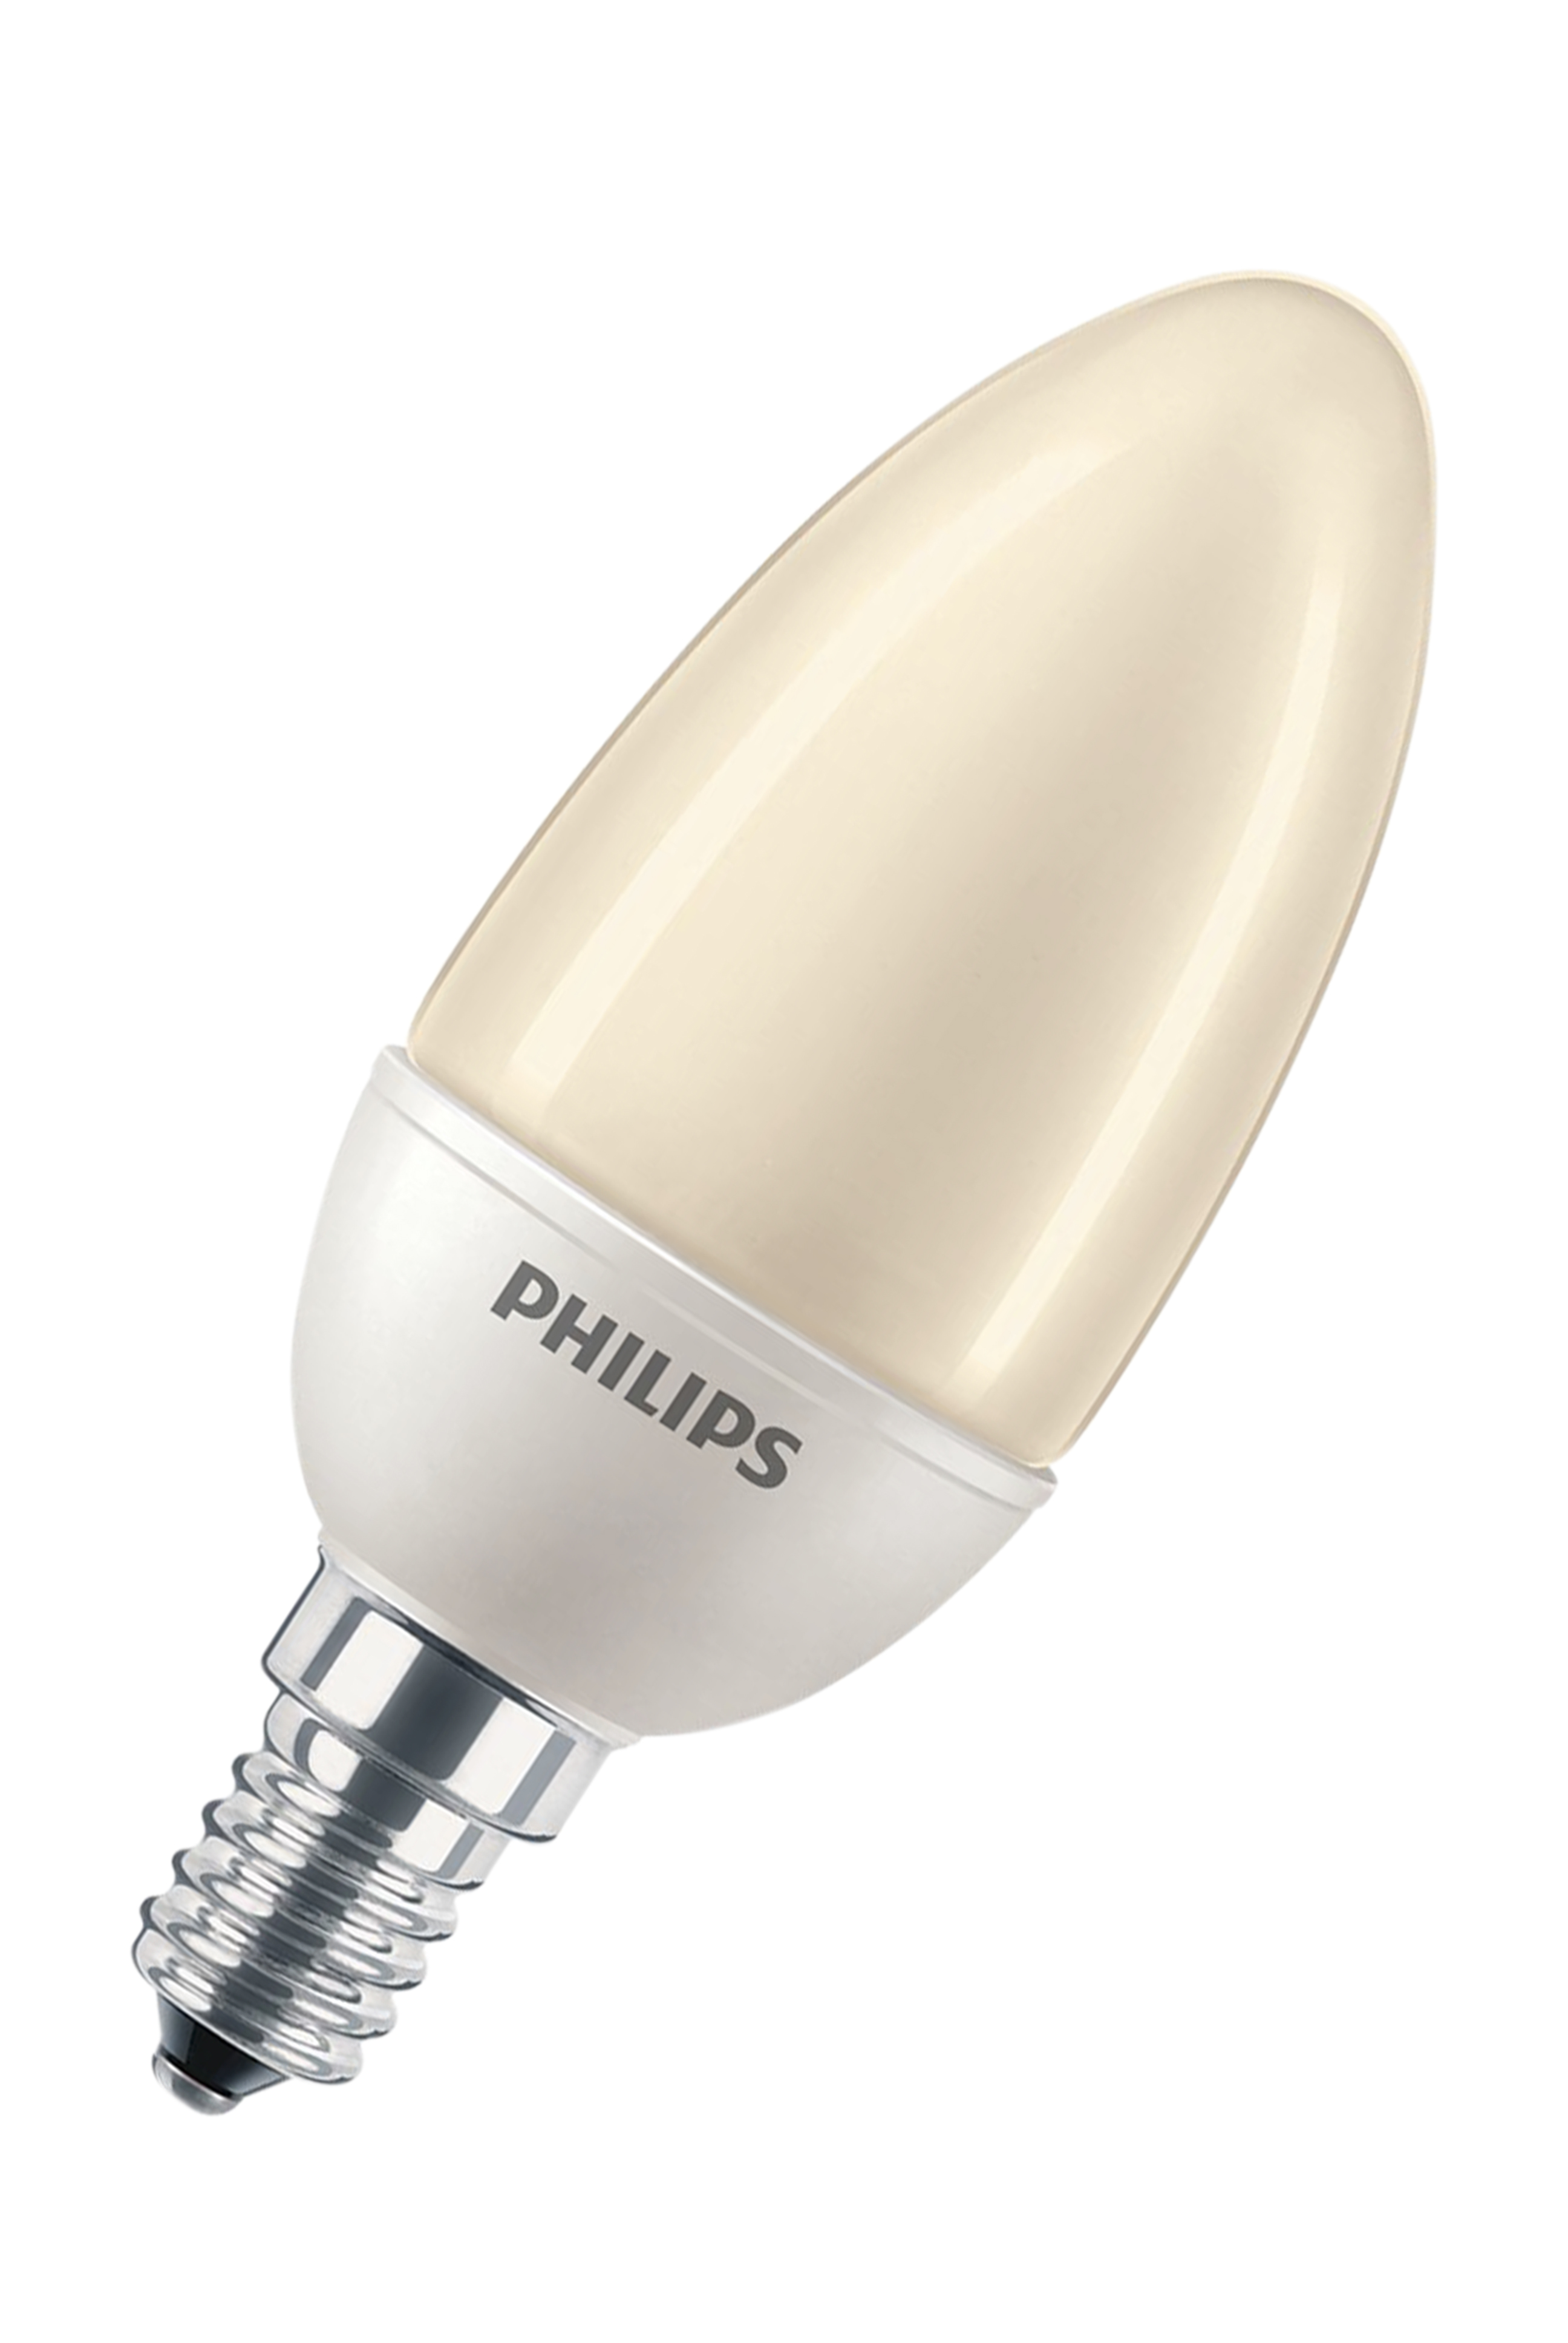 08727900905229 - Compact fluorescent lamp integrated ballast - Lamps - e-Bailey |